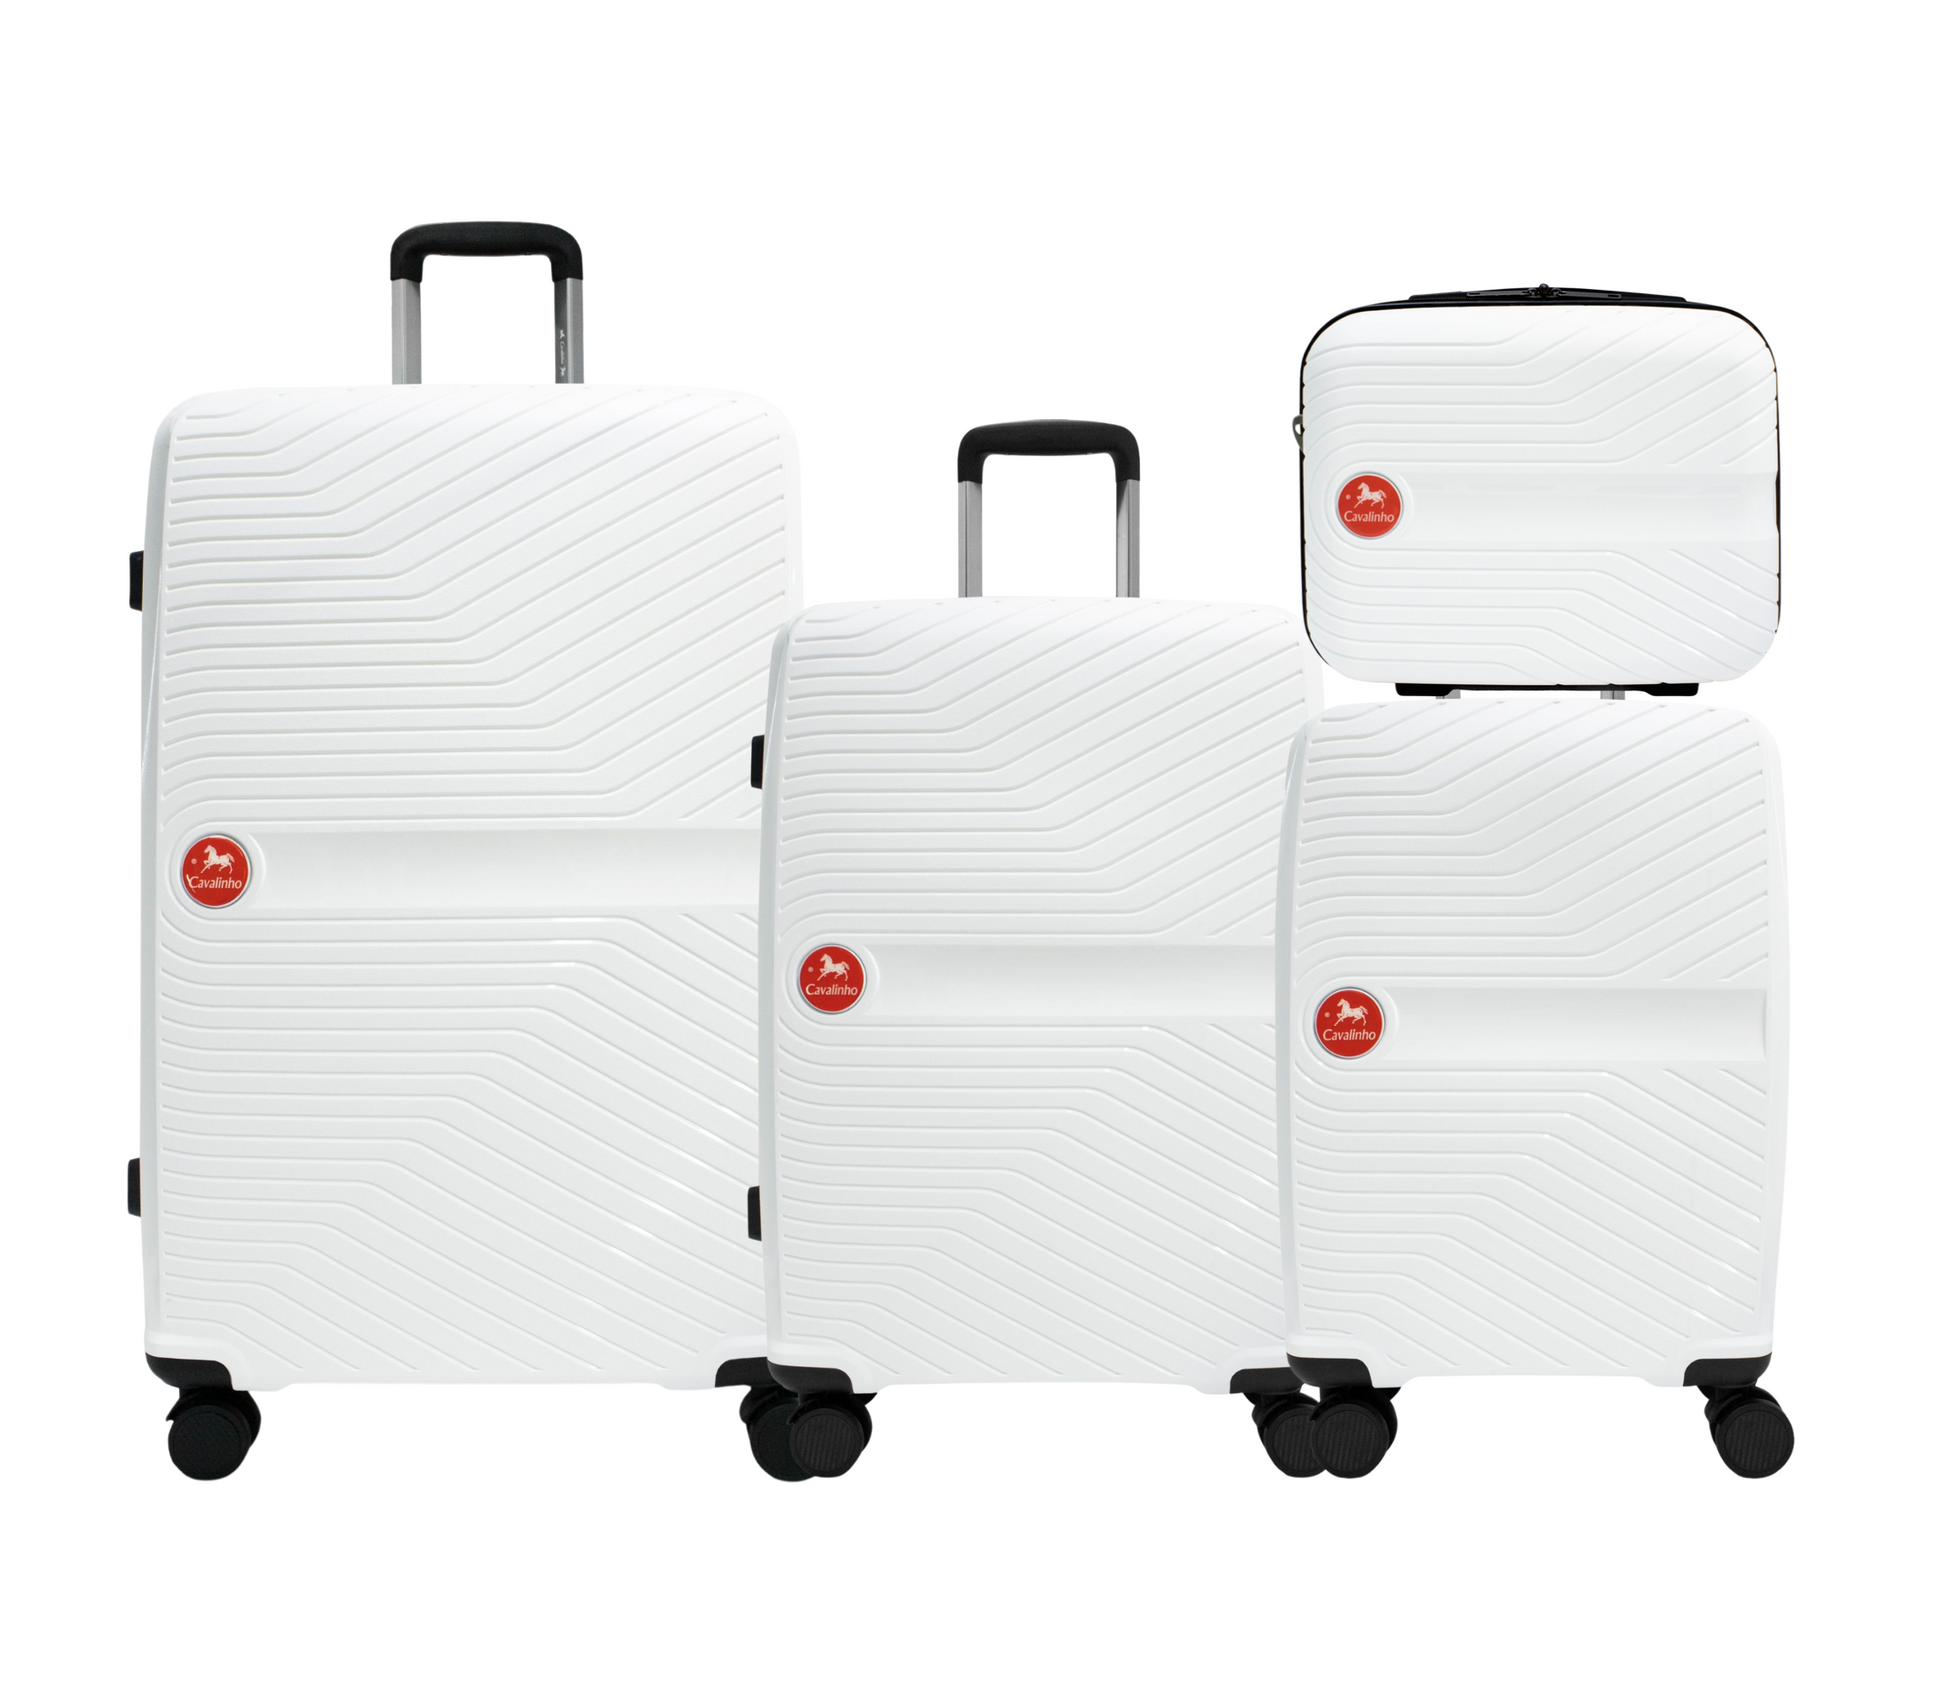 Cavalinho Canada & USA 4 Piece Set of Colorful Hardside Luggage (15", 19", 24", 28") - White - 68020004.06.S4_1